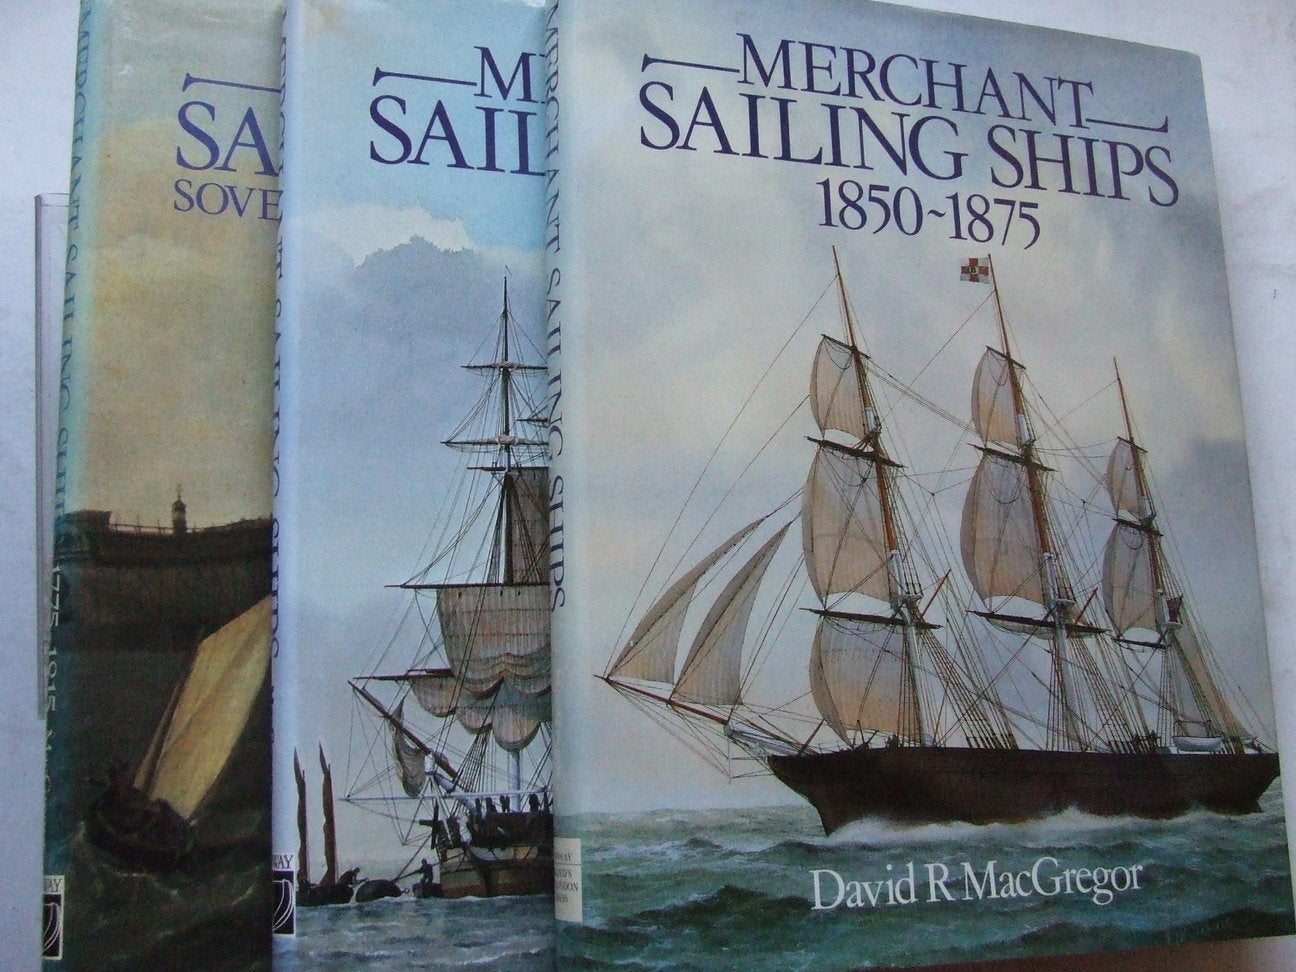 Merchant Sailing Ships - three volume set